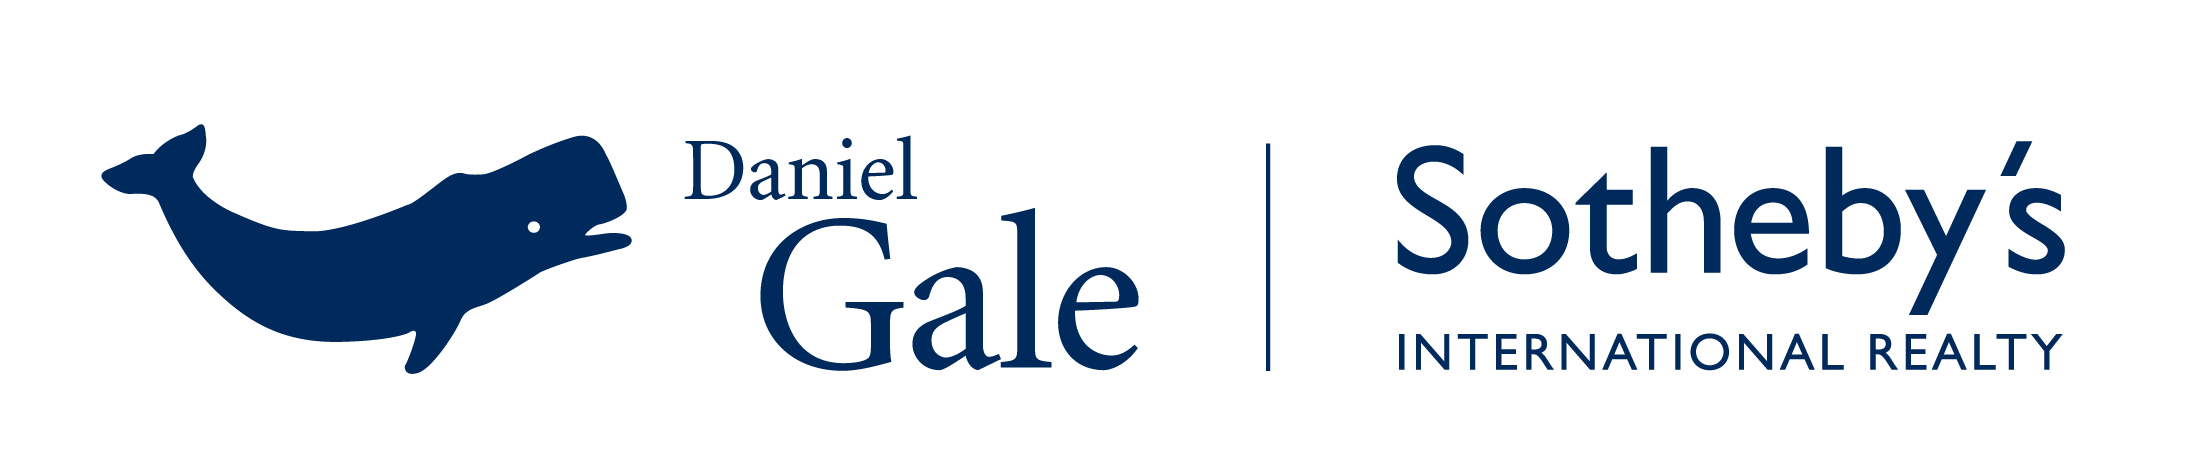 daniel gale logo